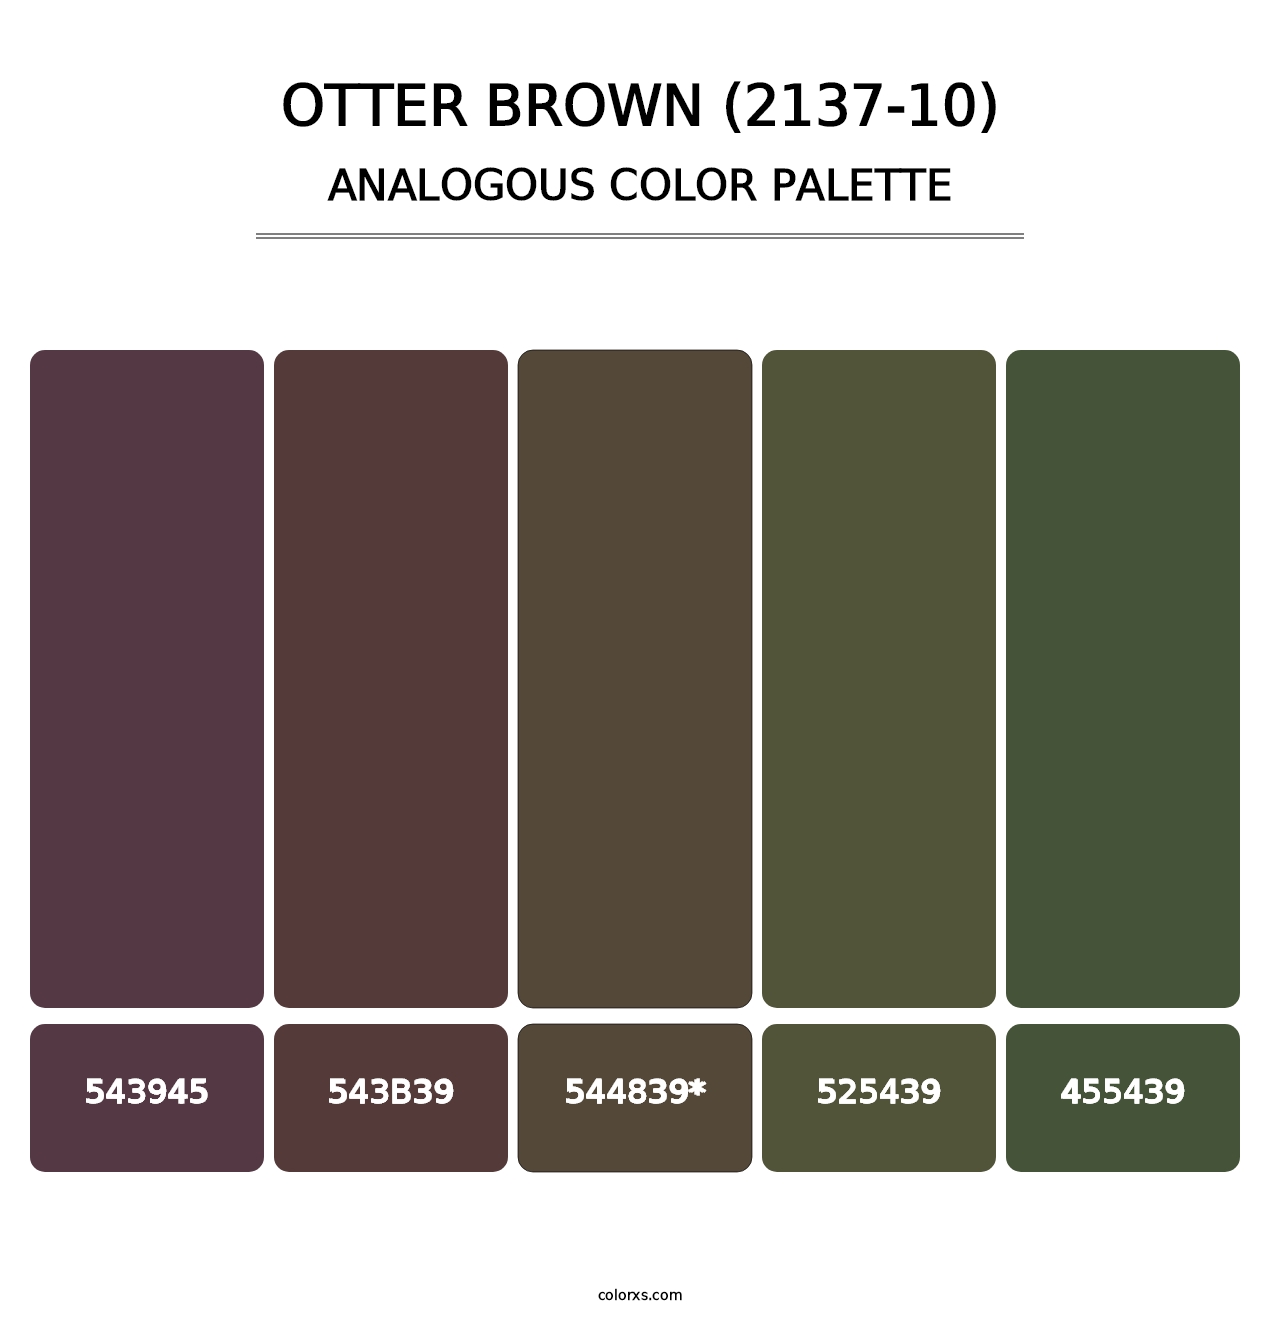 Otter Brown (2137-10) - Analogous Color Palette